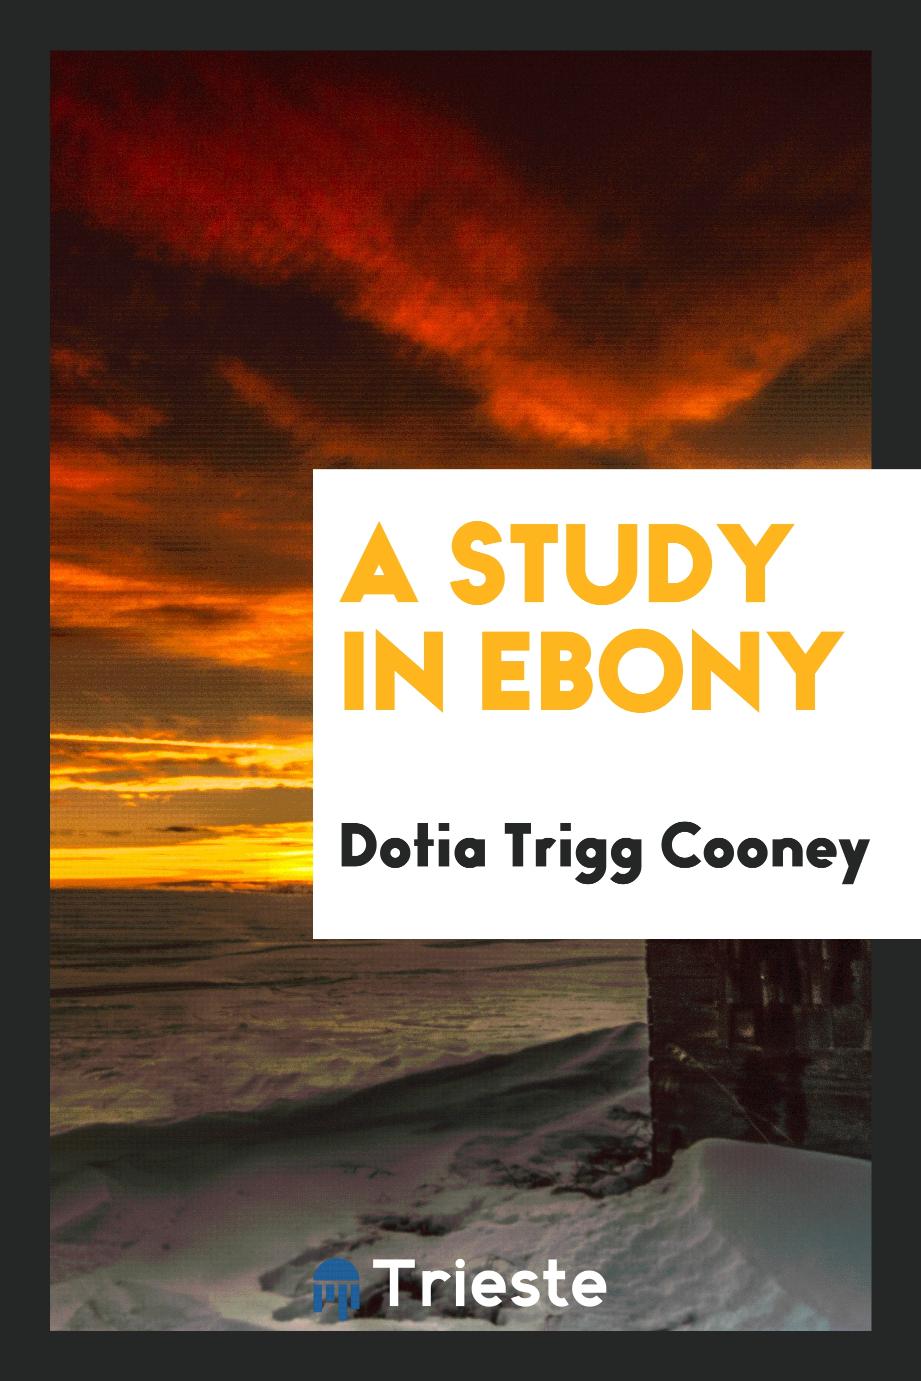 A study in ebony